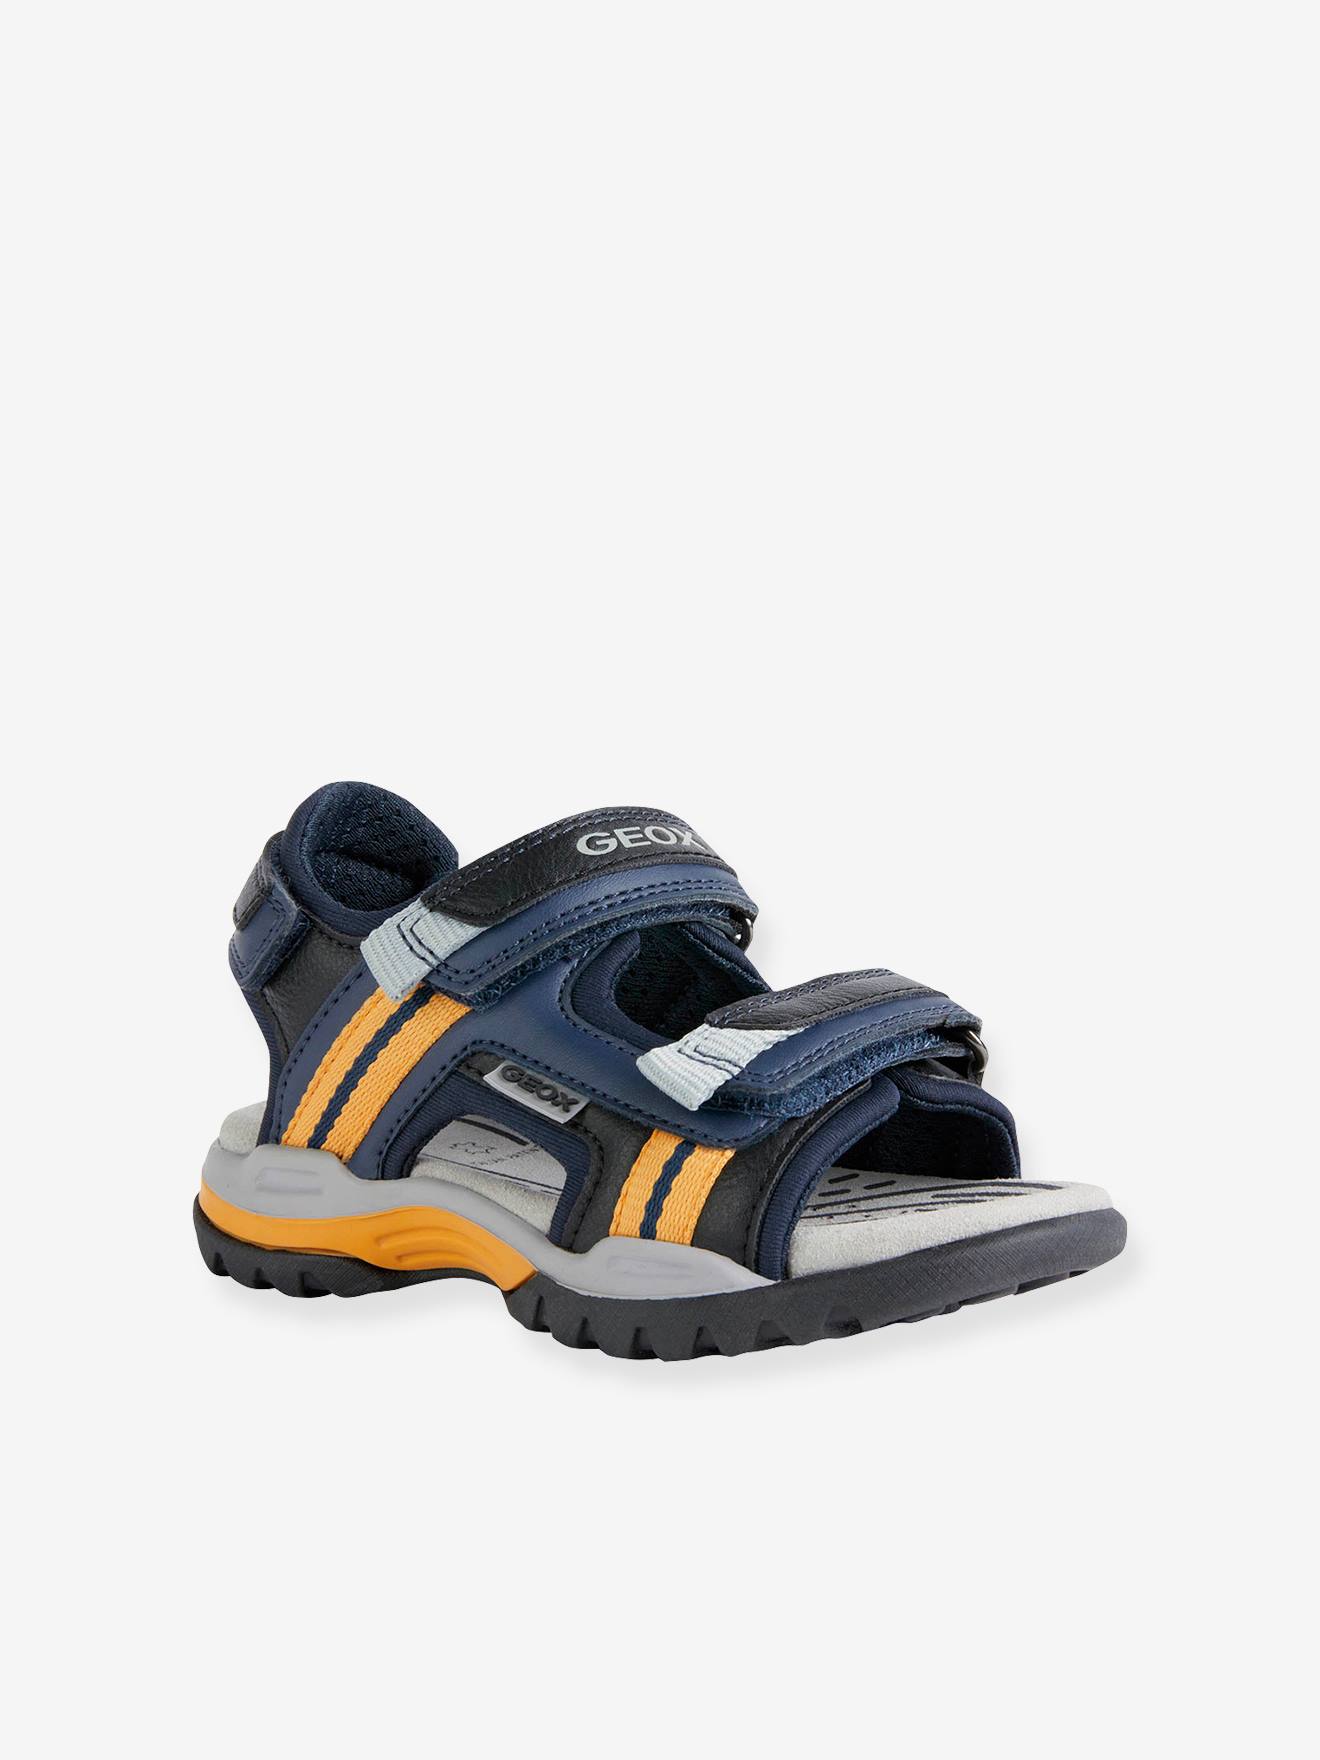 Lionel Green Street frágil Diacrítico Sandals for Boys, J. Borealis B.A by GEOX® - blue dark solid, Shoes